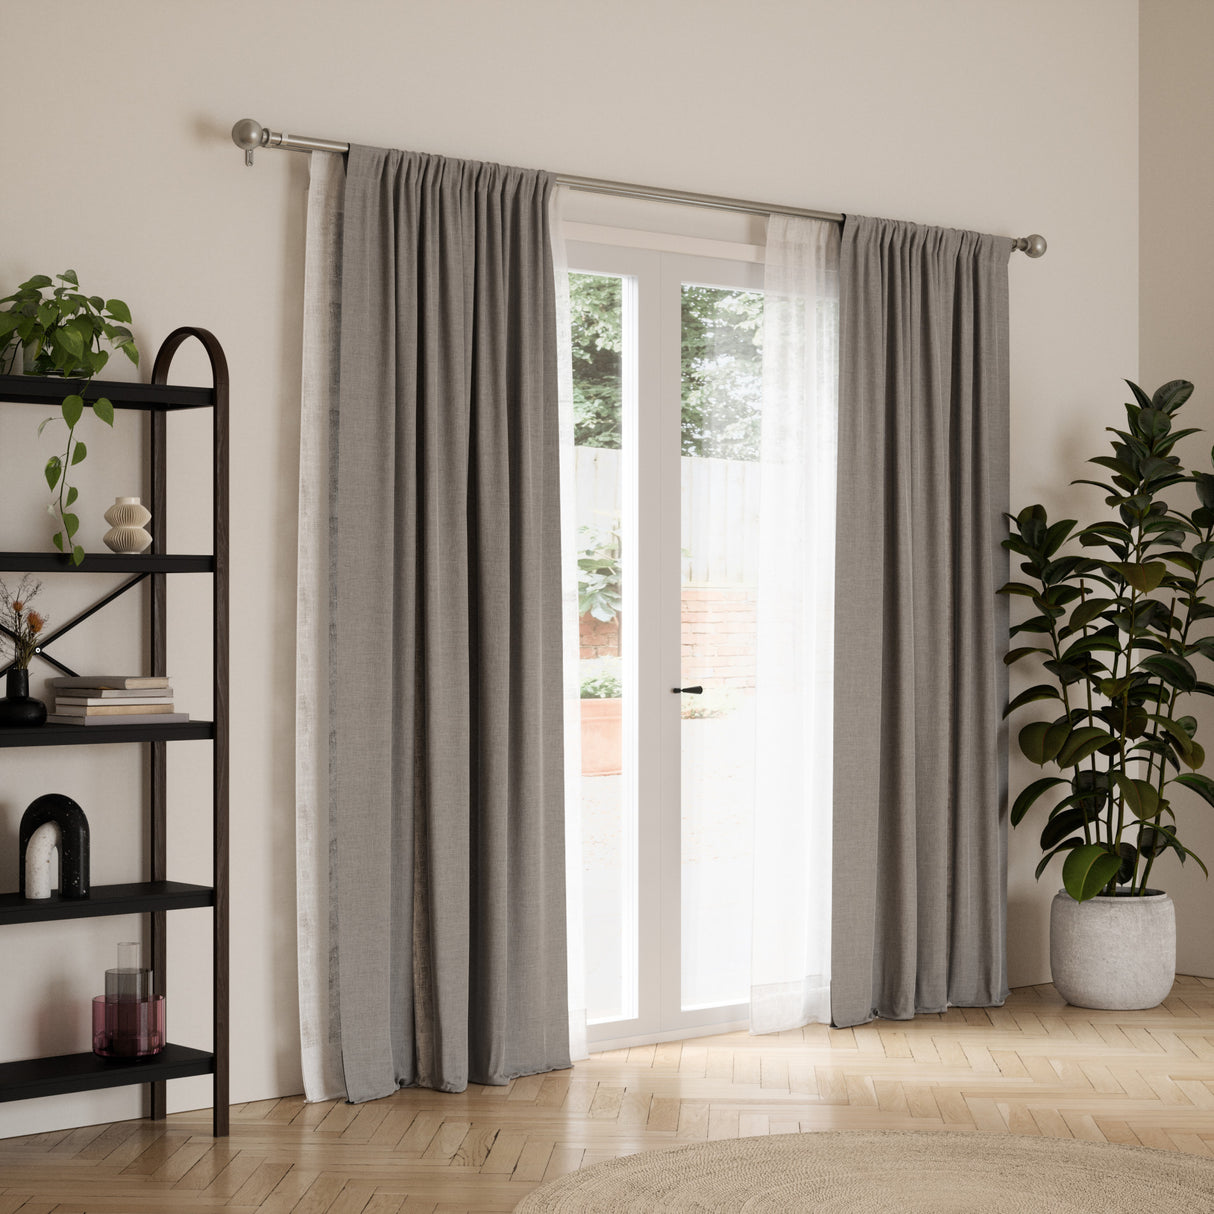 Double Curtain Rods | color: Eco-Friendly Nickel | size: 72-144" (183-366 cm) | diameter: 1 & 3/4" (4.44 cm)